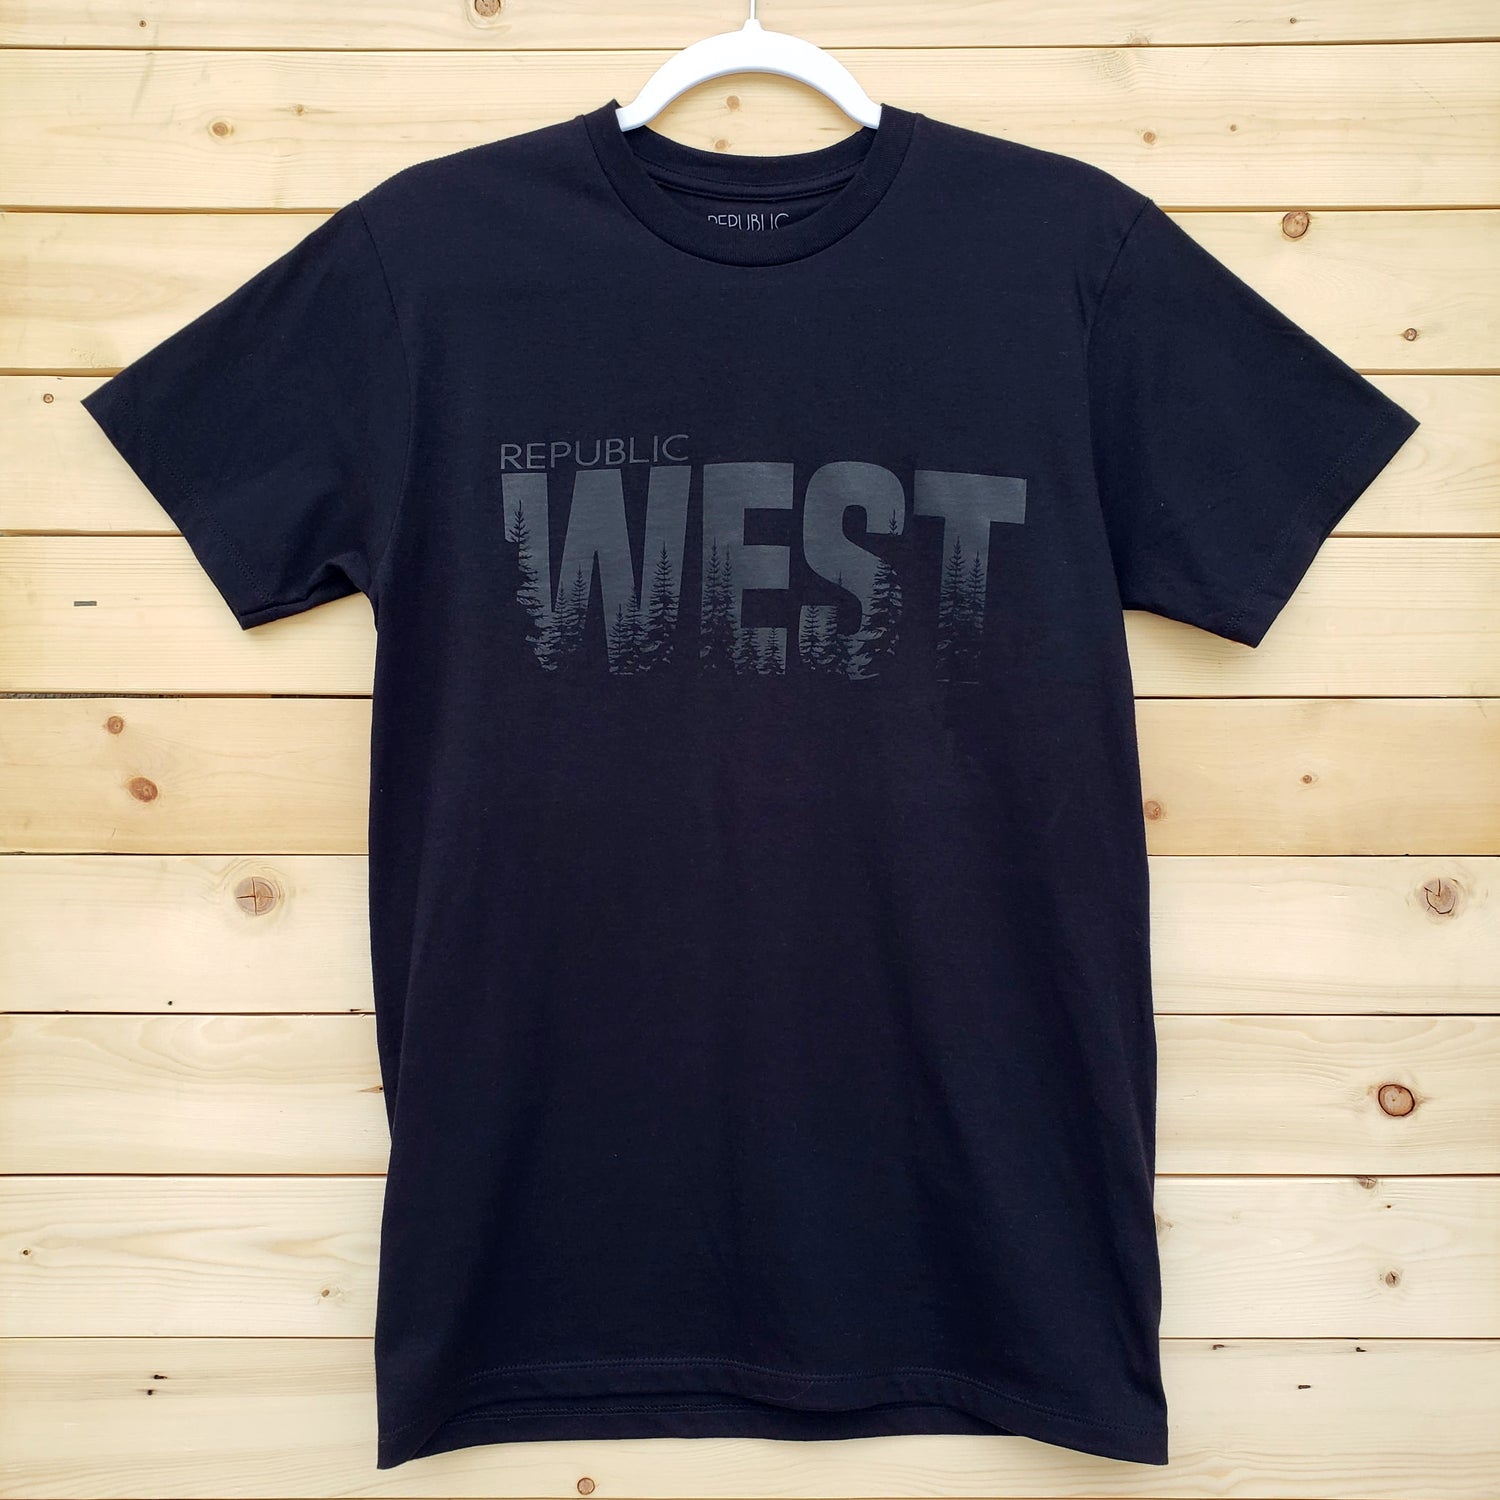 tshirt West Woods T-Shirt - Black Republic West